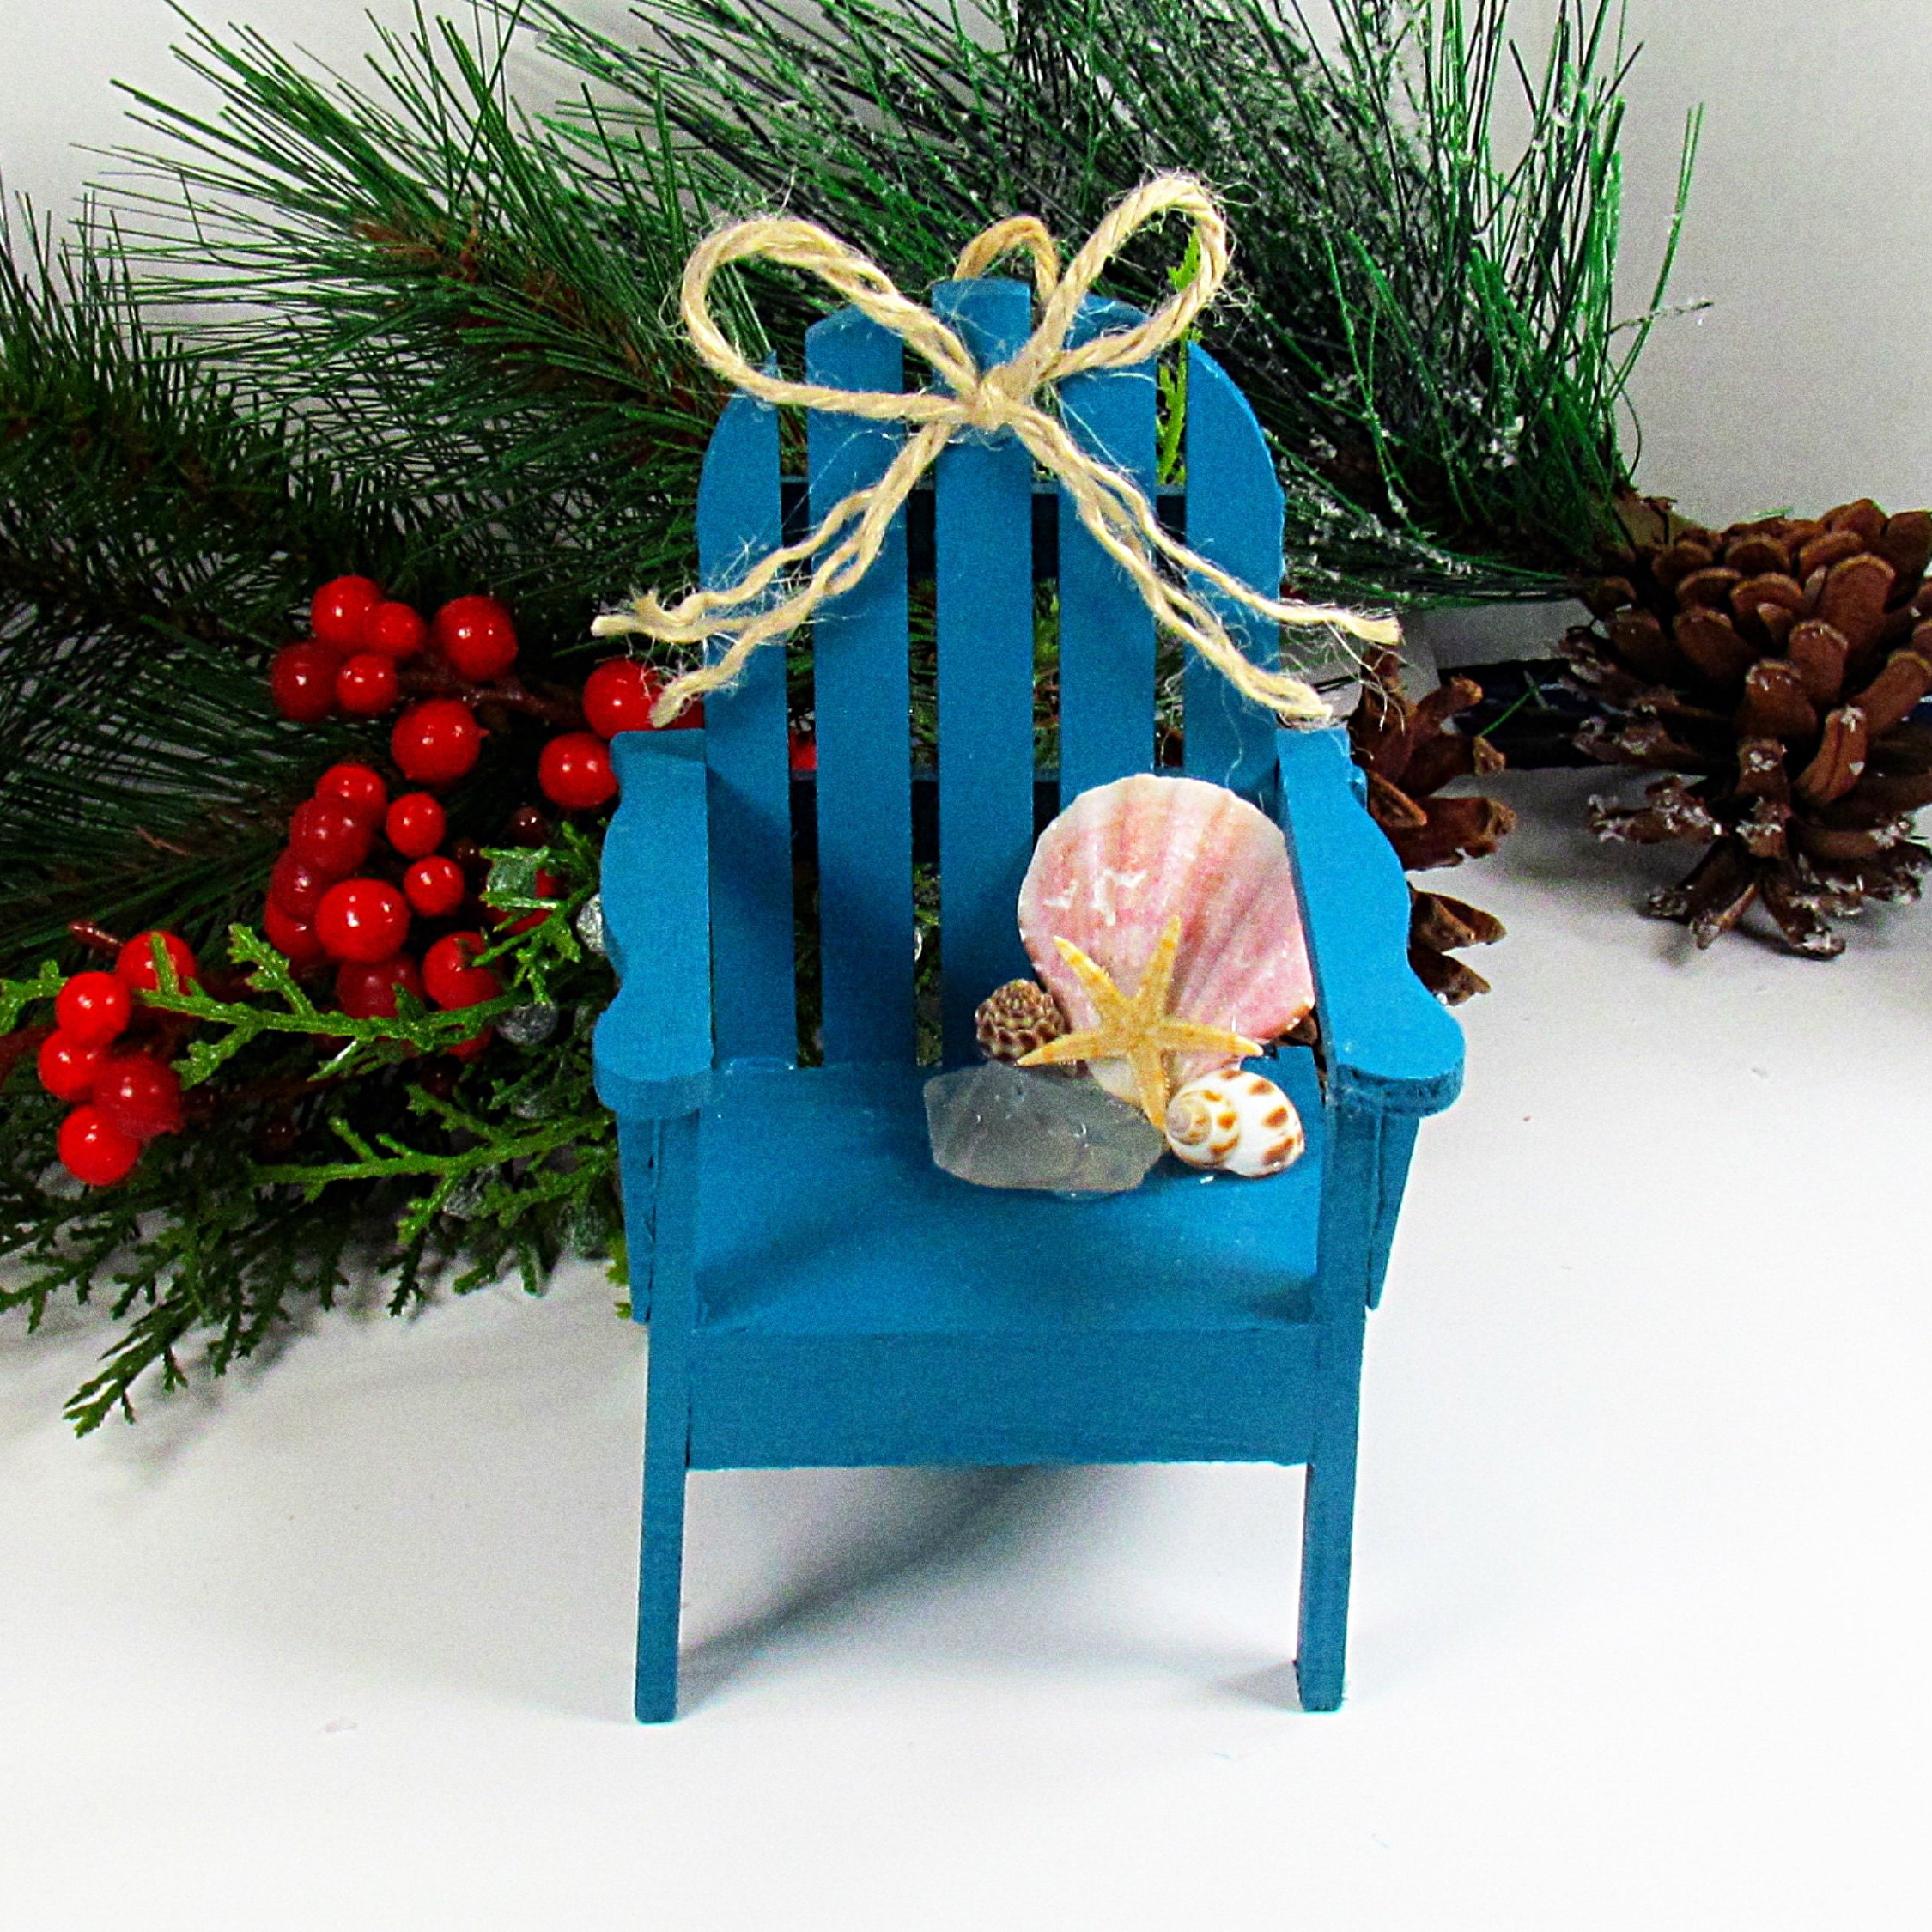  Blue Beach Chair Ornament with Simple Decor